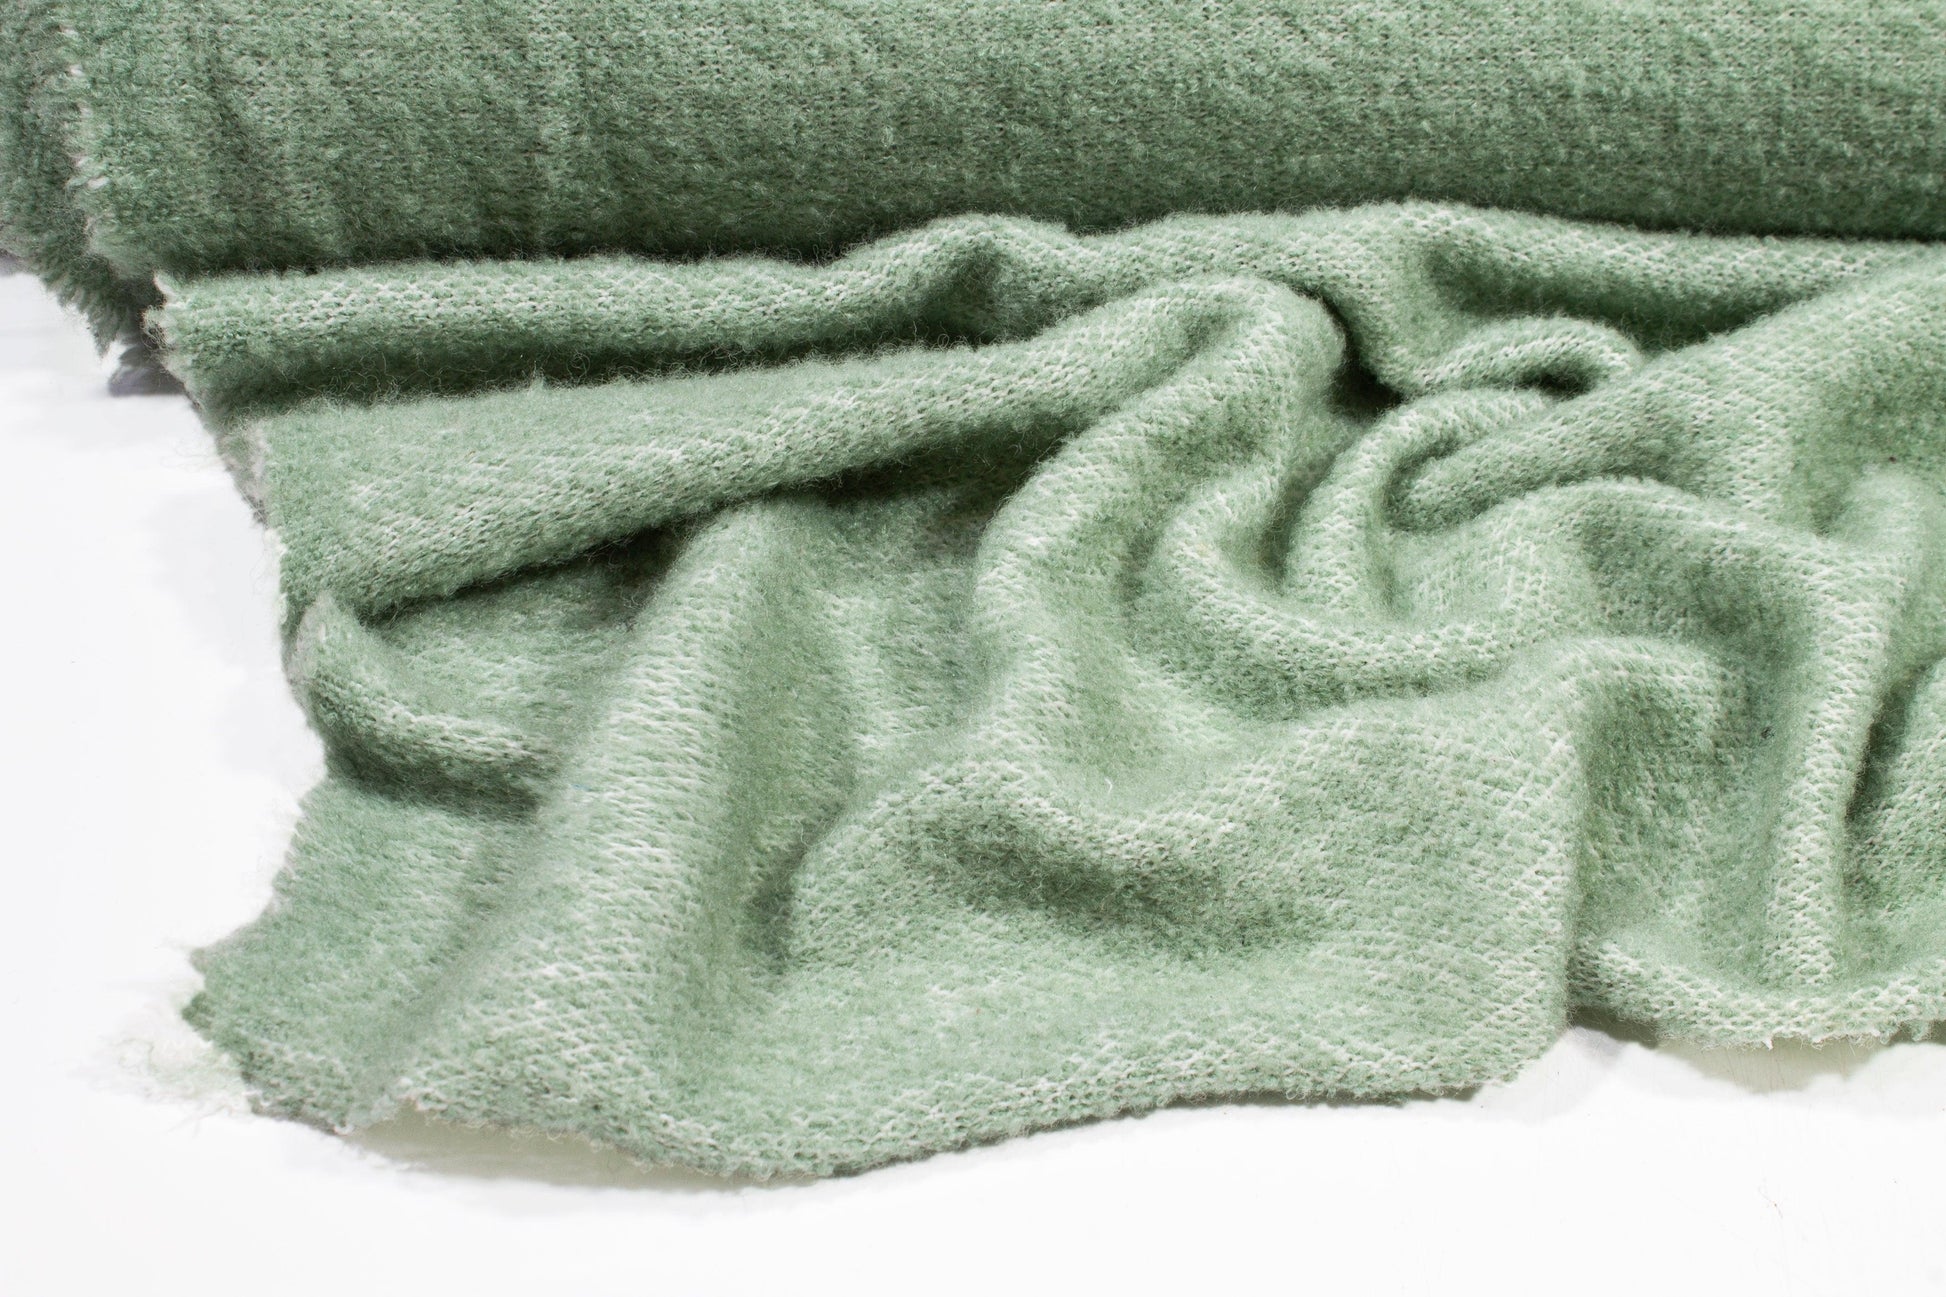 Mint Green Wool Jersey Knit - Prime Fabrics